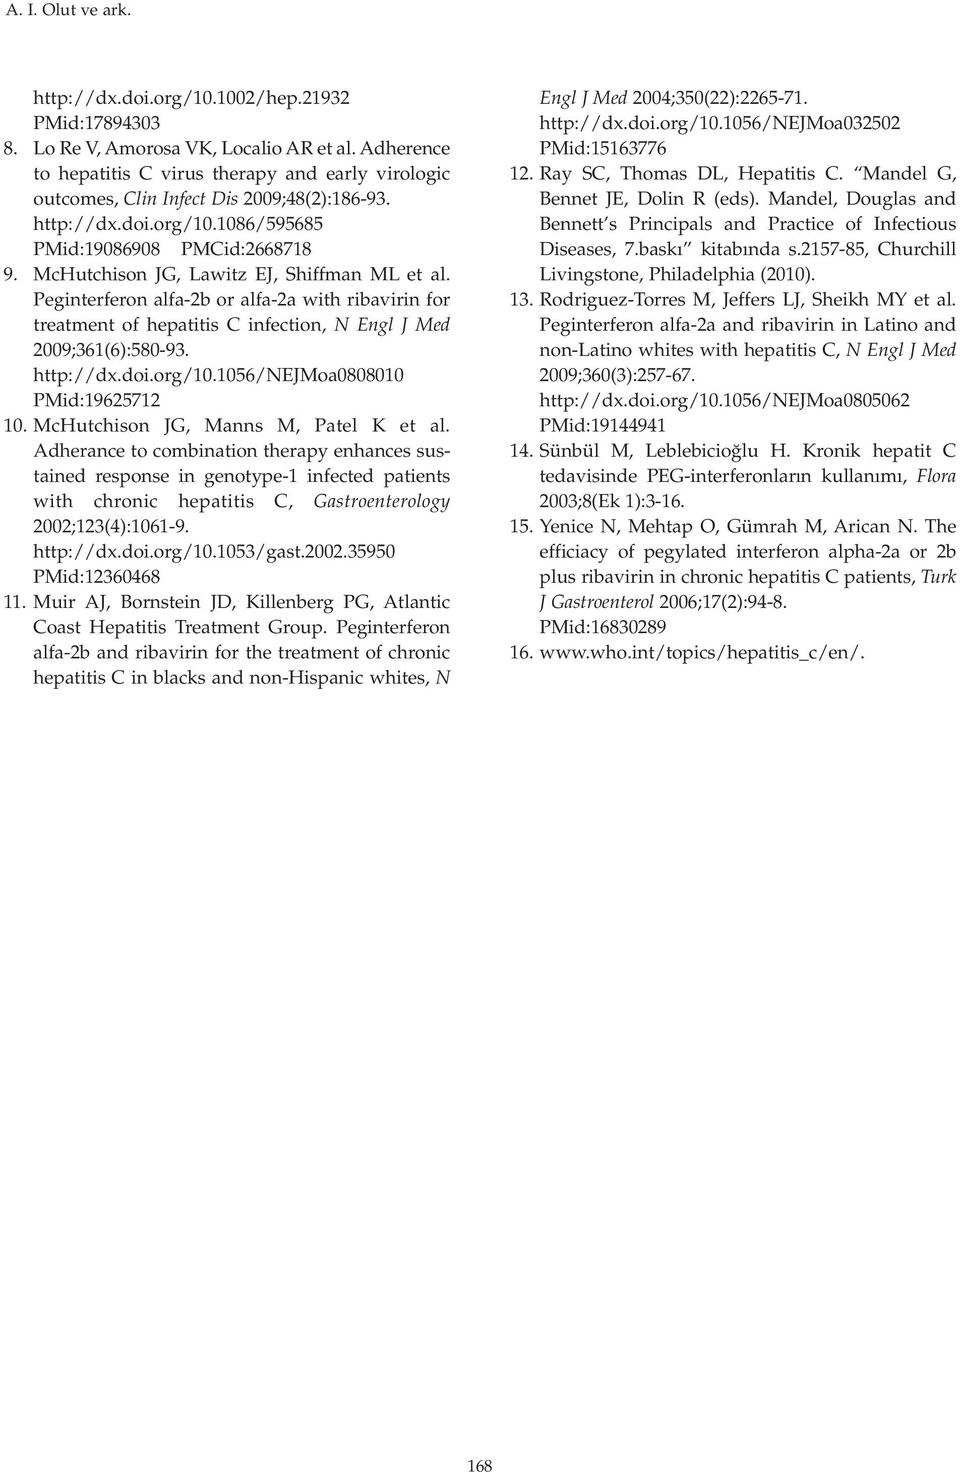 McHutchison JG, Lawitz EJ, Shiffman ML et al. Peginterferon alfa-2b or alfa-2a with ribavirin for treatment of hepatitis C infection, N Engl J Med 2009;361(6):580-93. http://dx.doi.org/10.